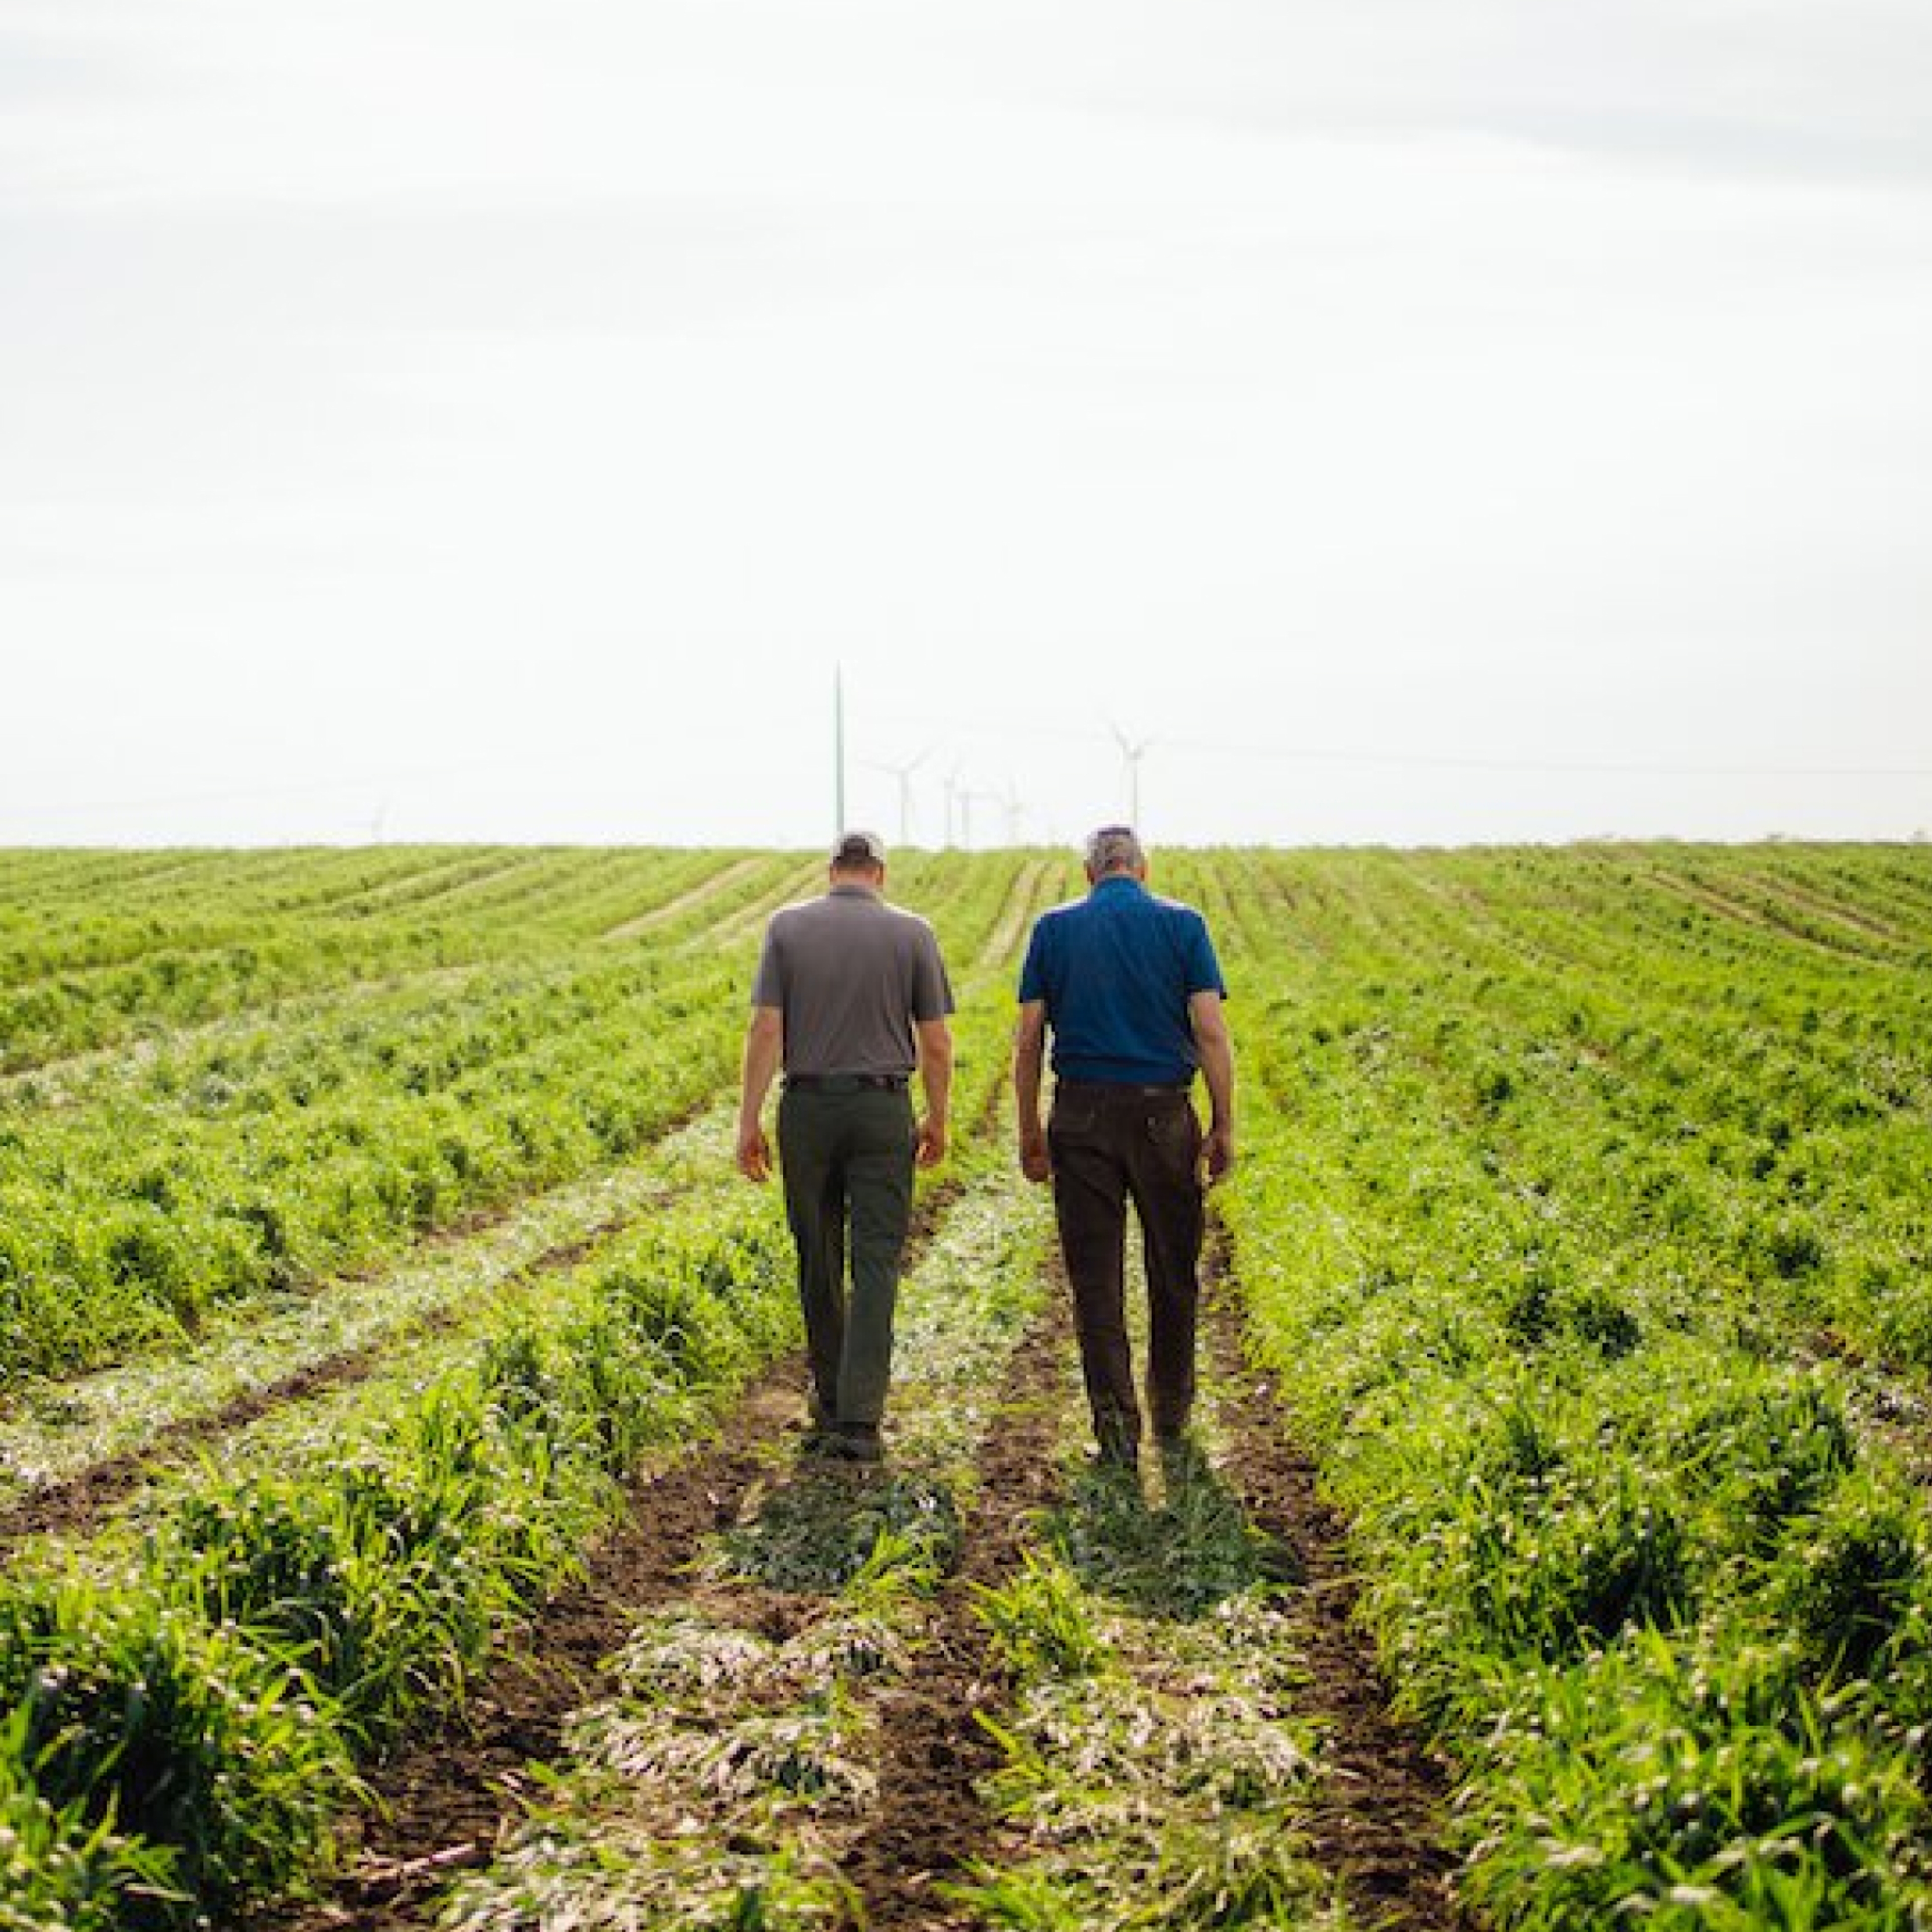 Two farmers walking together through their recently planted farmland